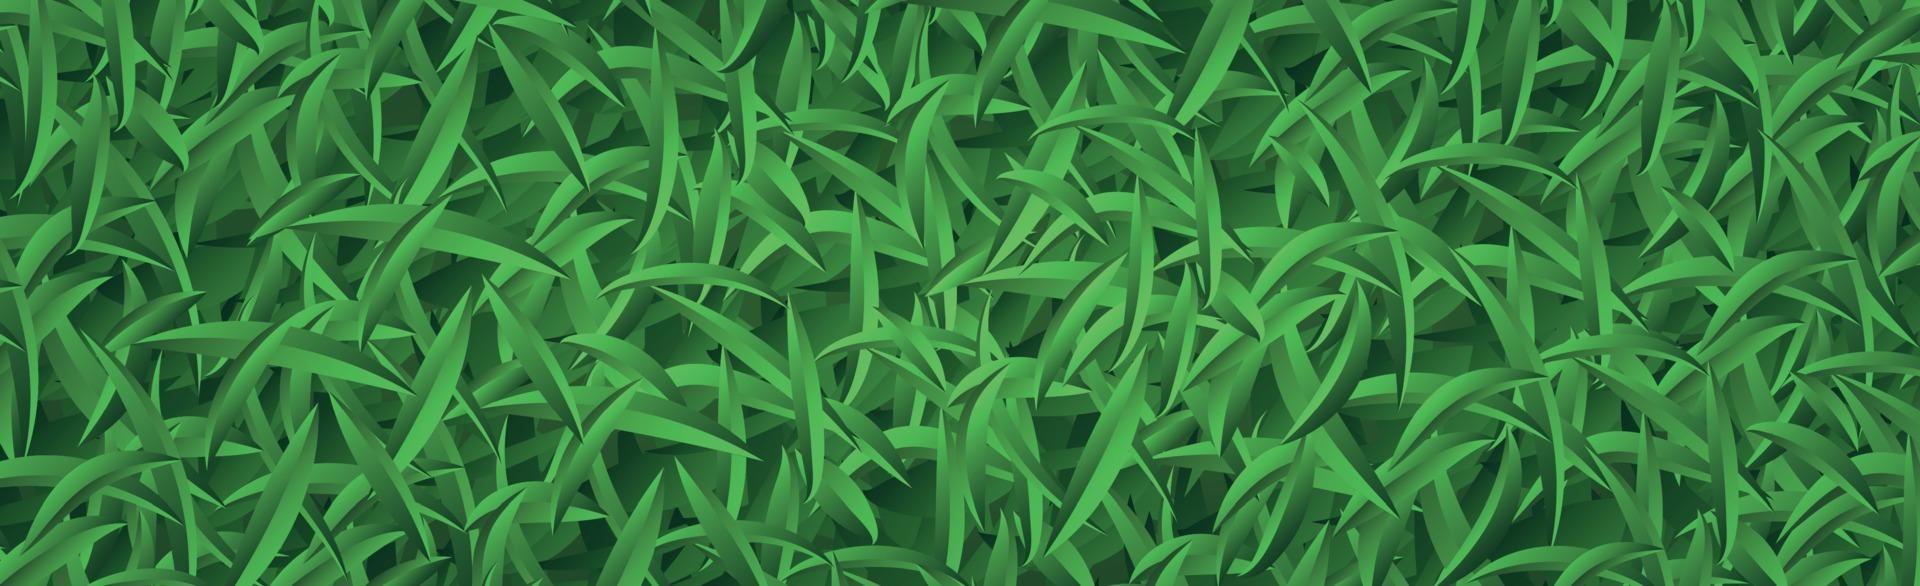 realistiskt ljust grönt gräs, gräsmatta bakgrund - vektor